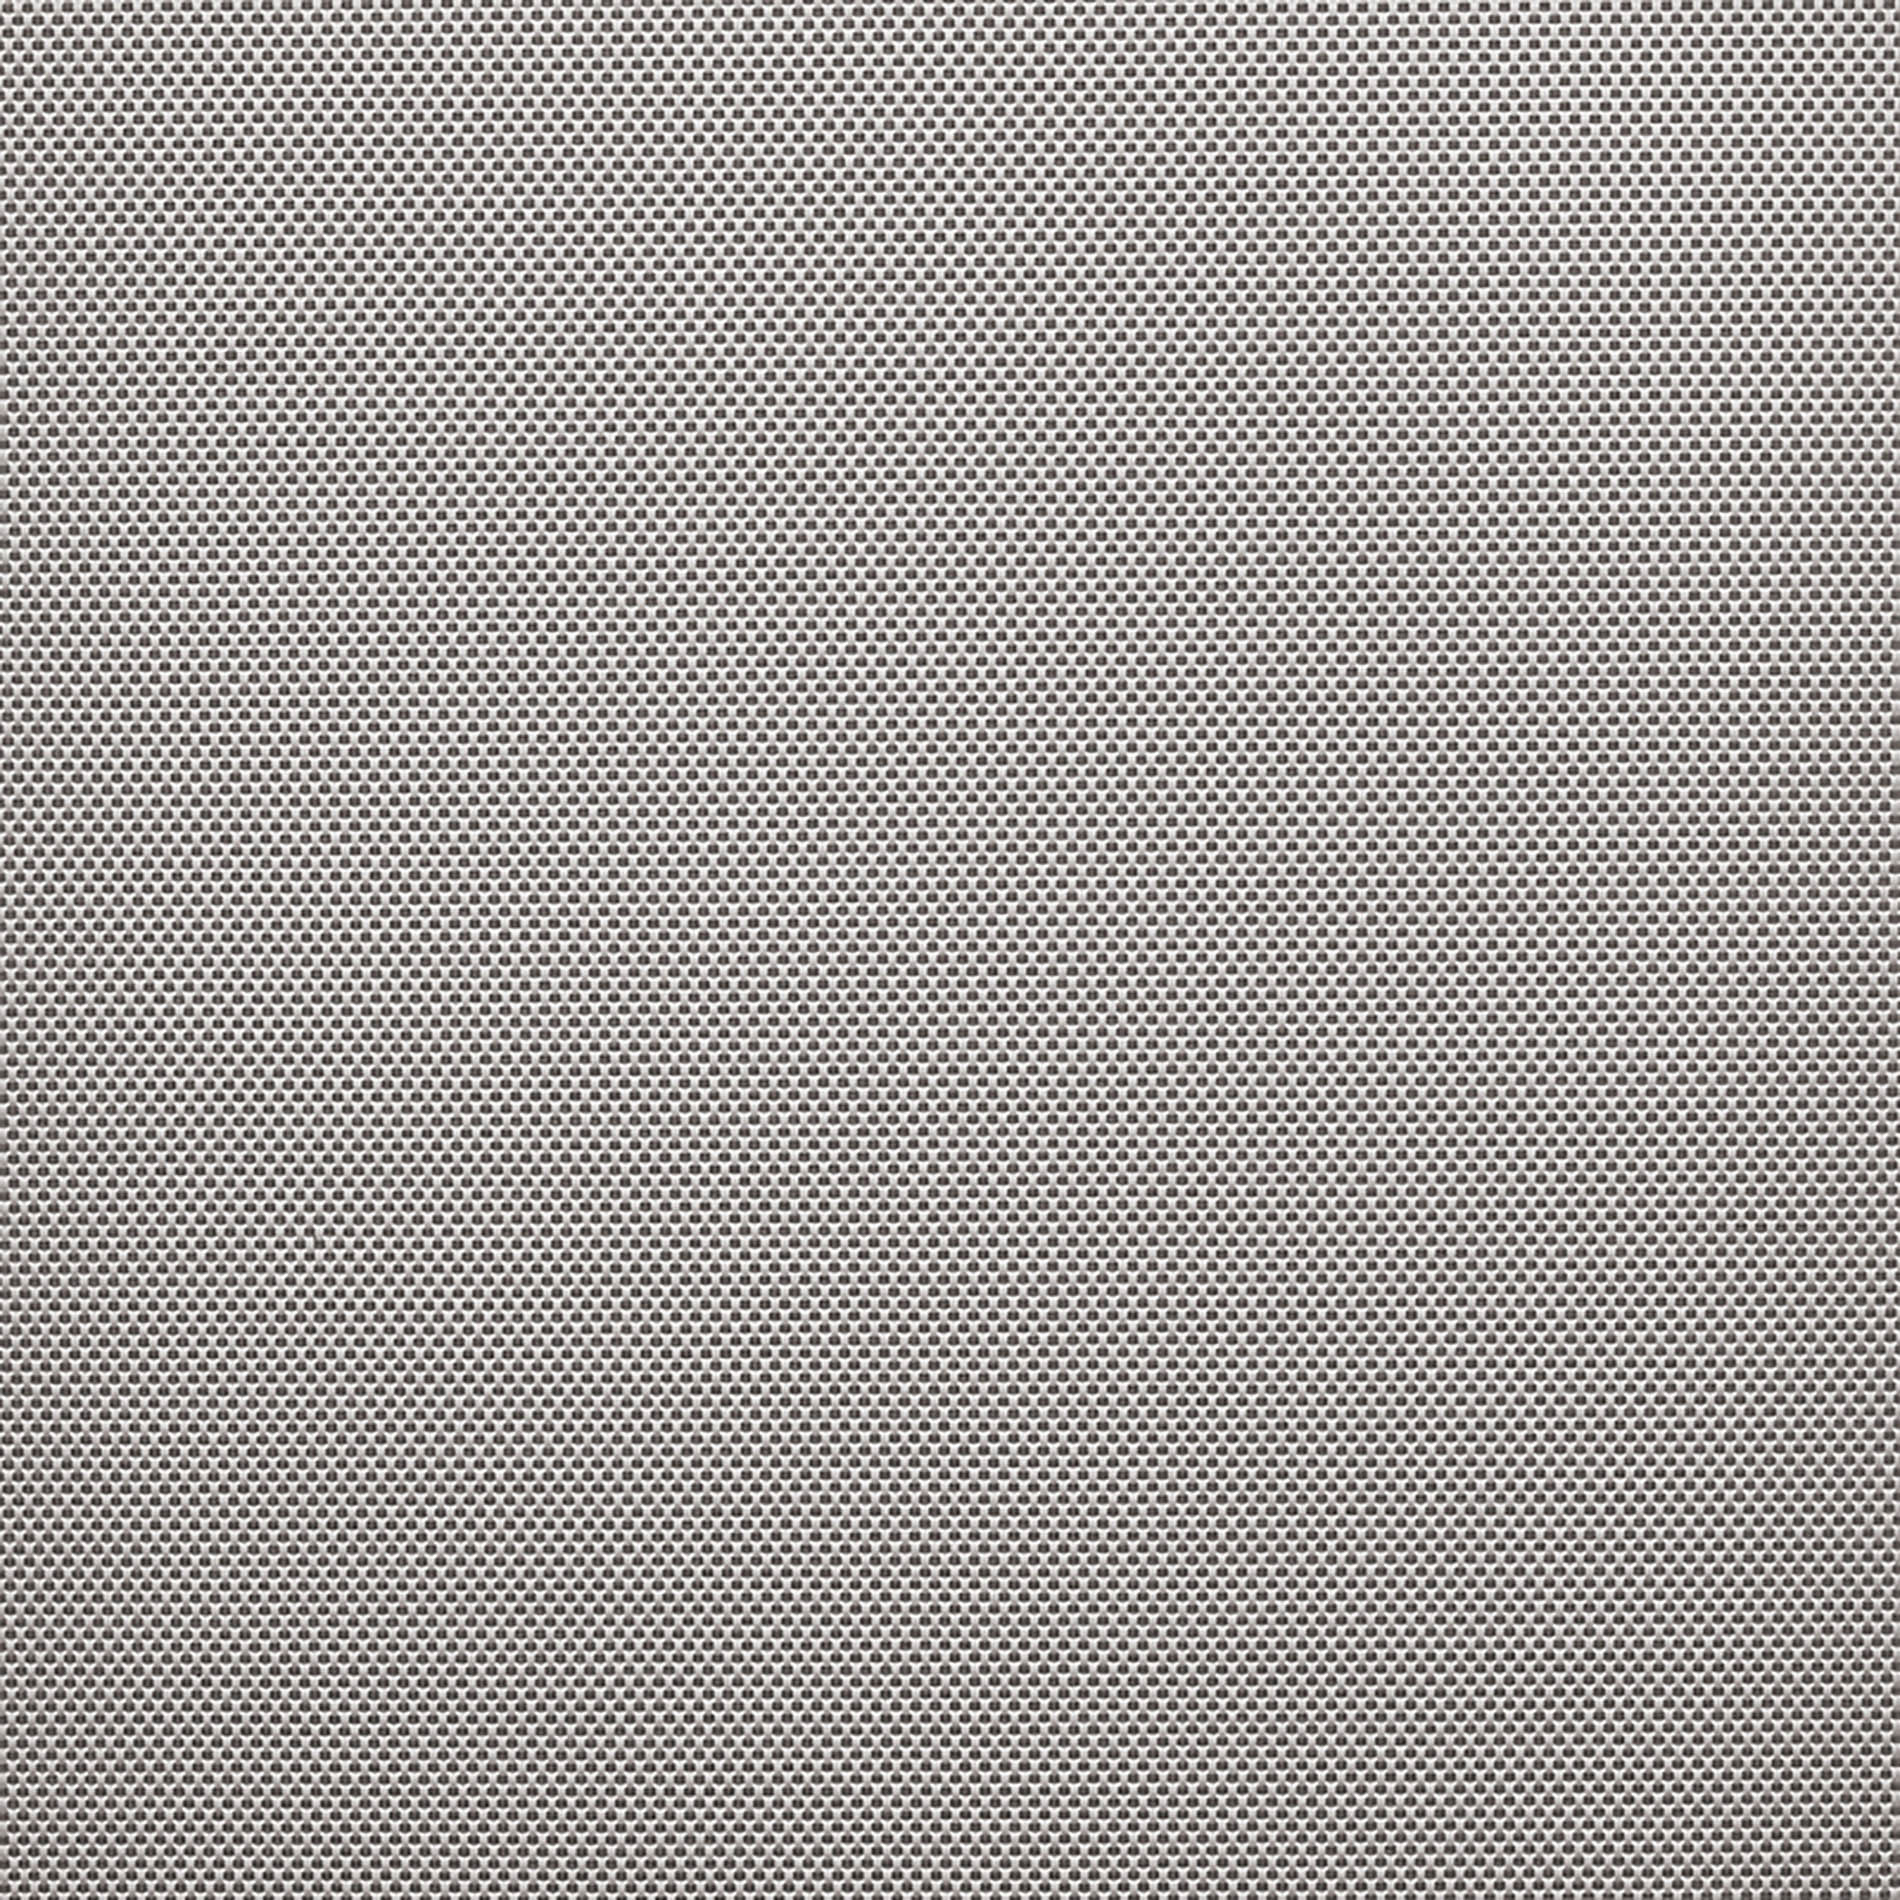 Altex - Fabric - ARGON_1 - White/Pearl Grey - ARGON_103